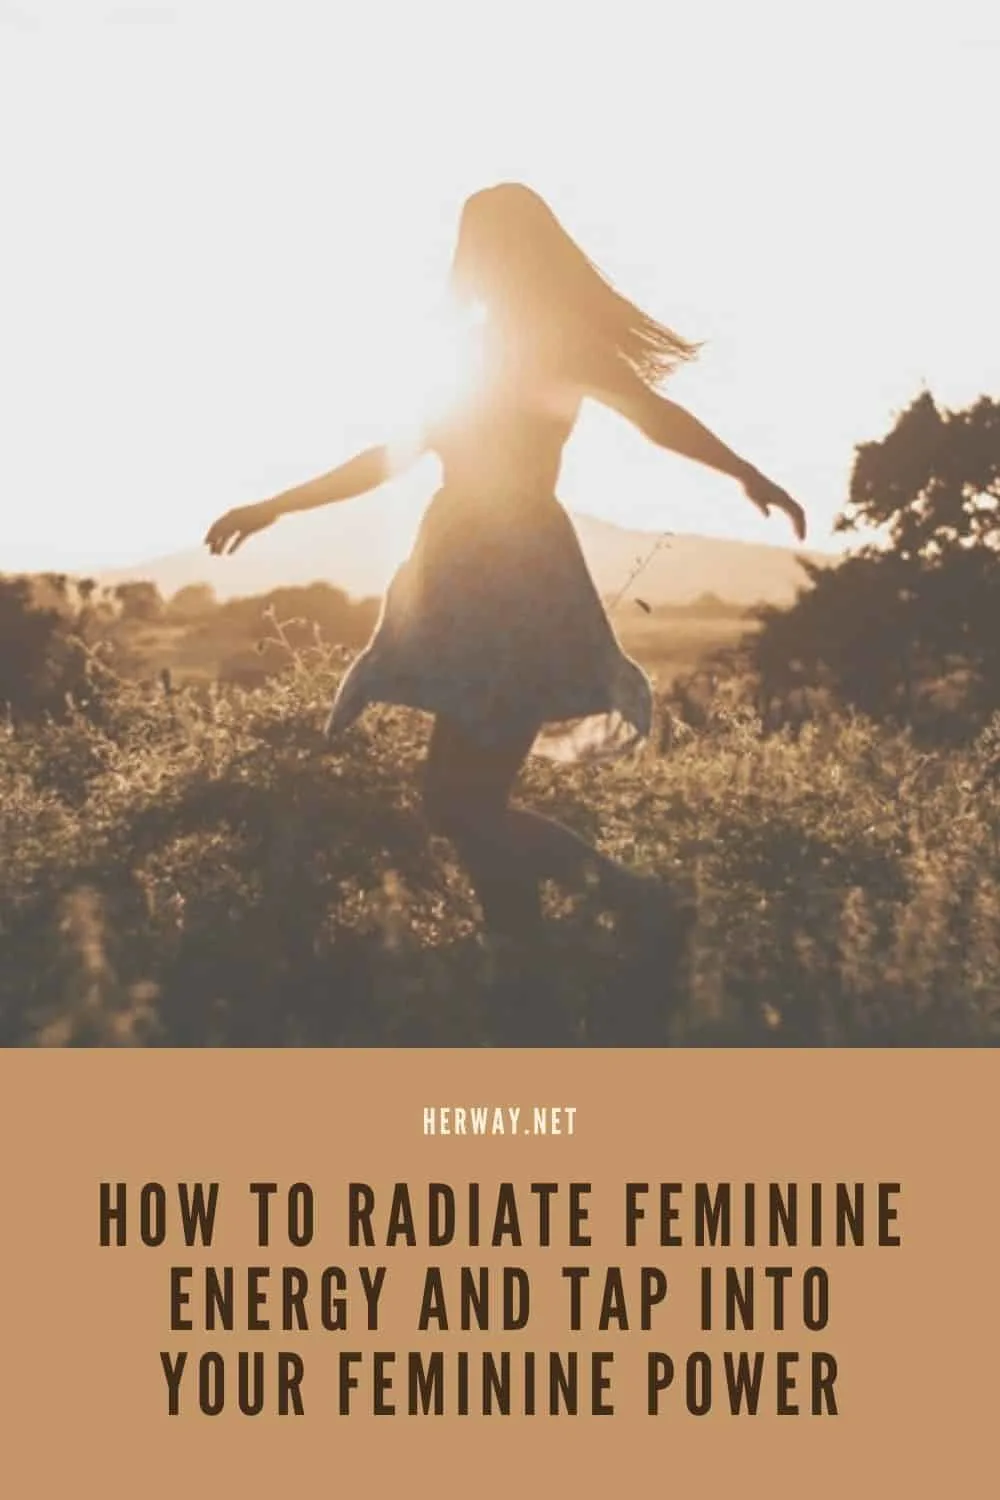 How To Radiate Feminine Energy And Tap Into Your Feminine Power